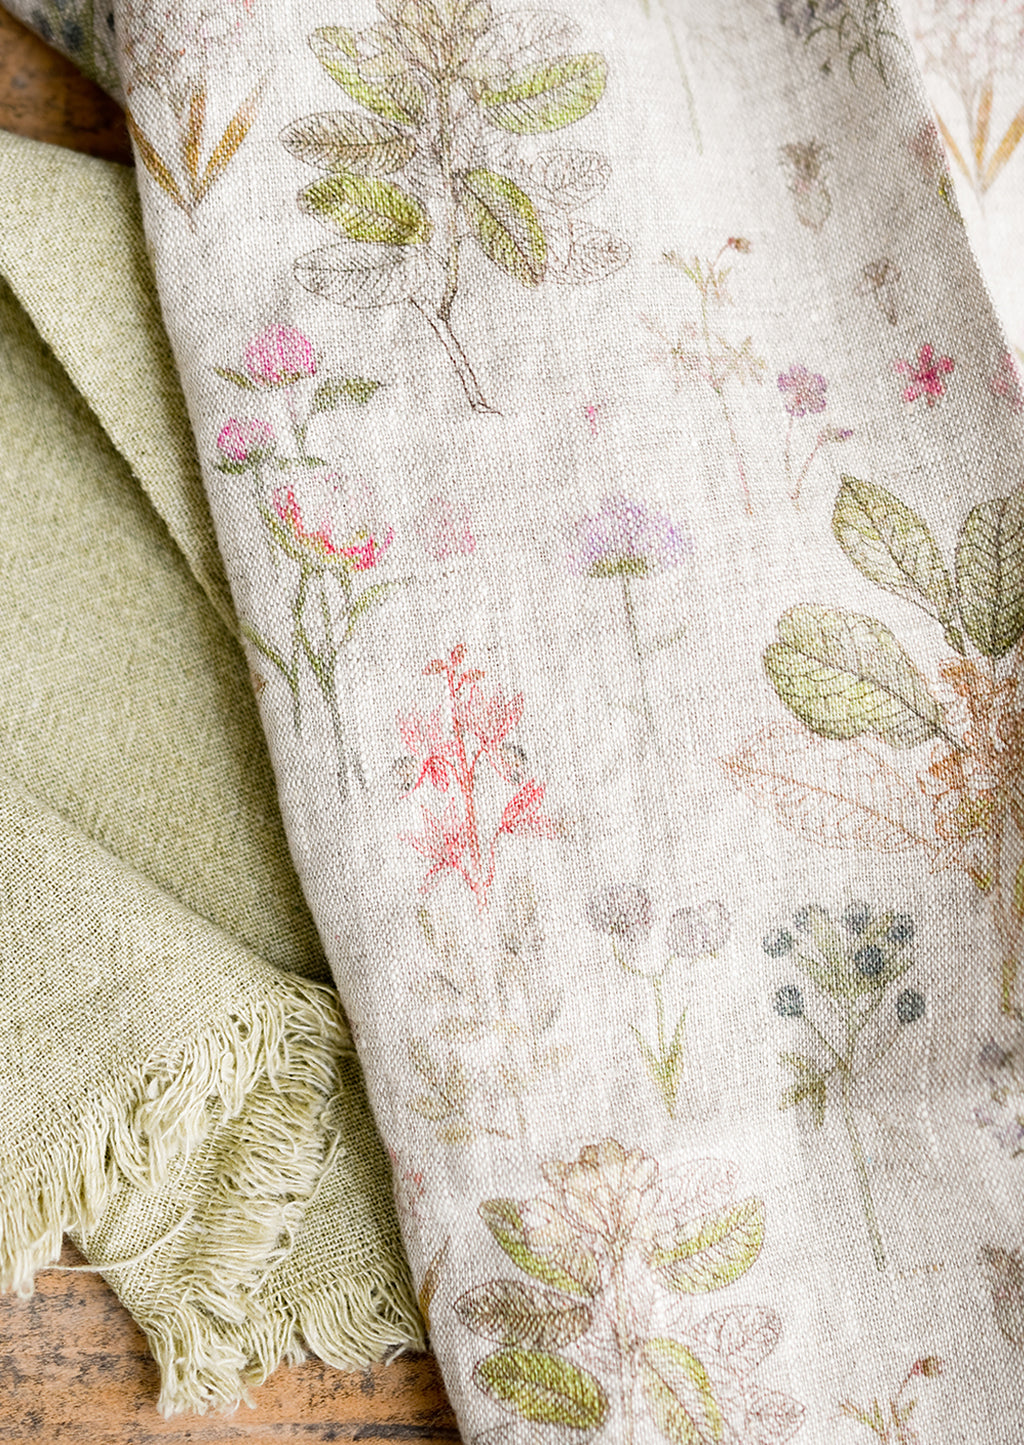 4: A botanically printed natural linen tea towel.